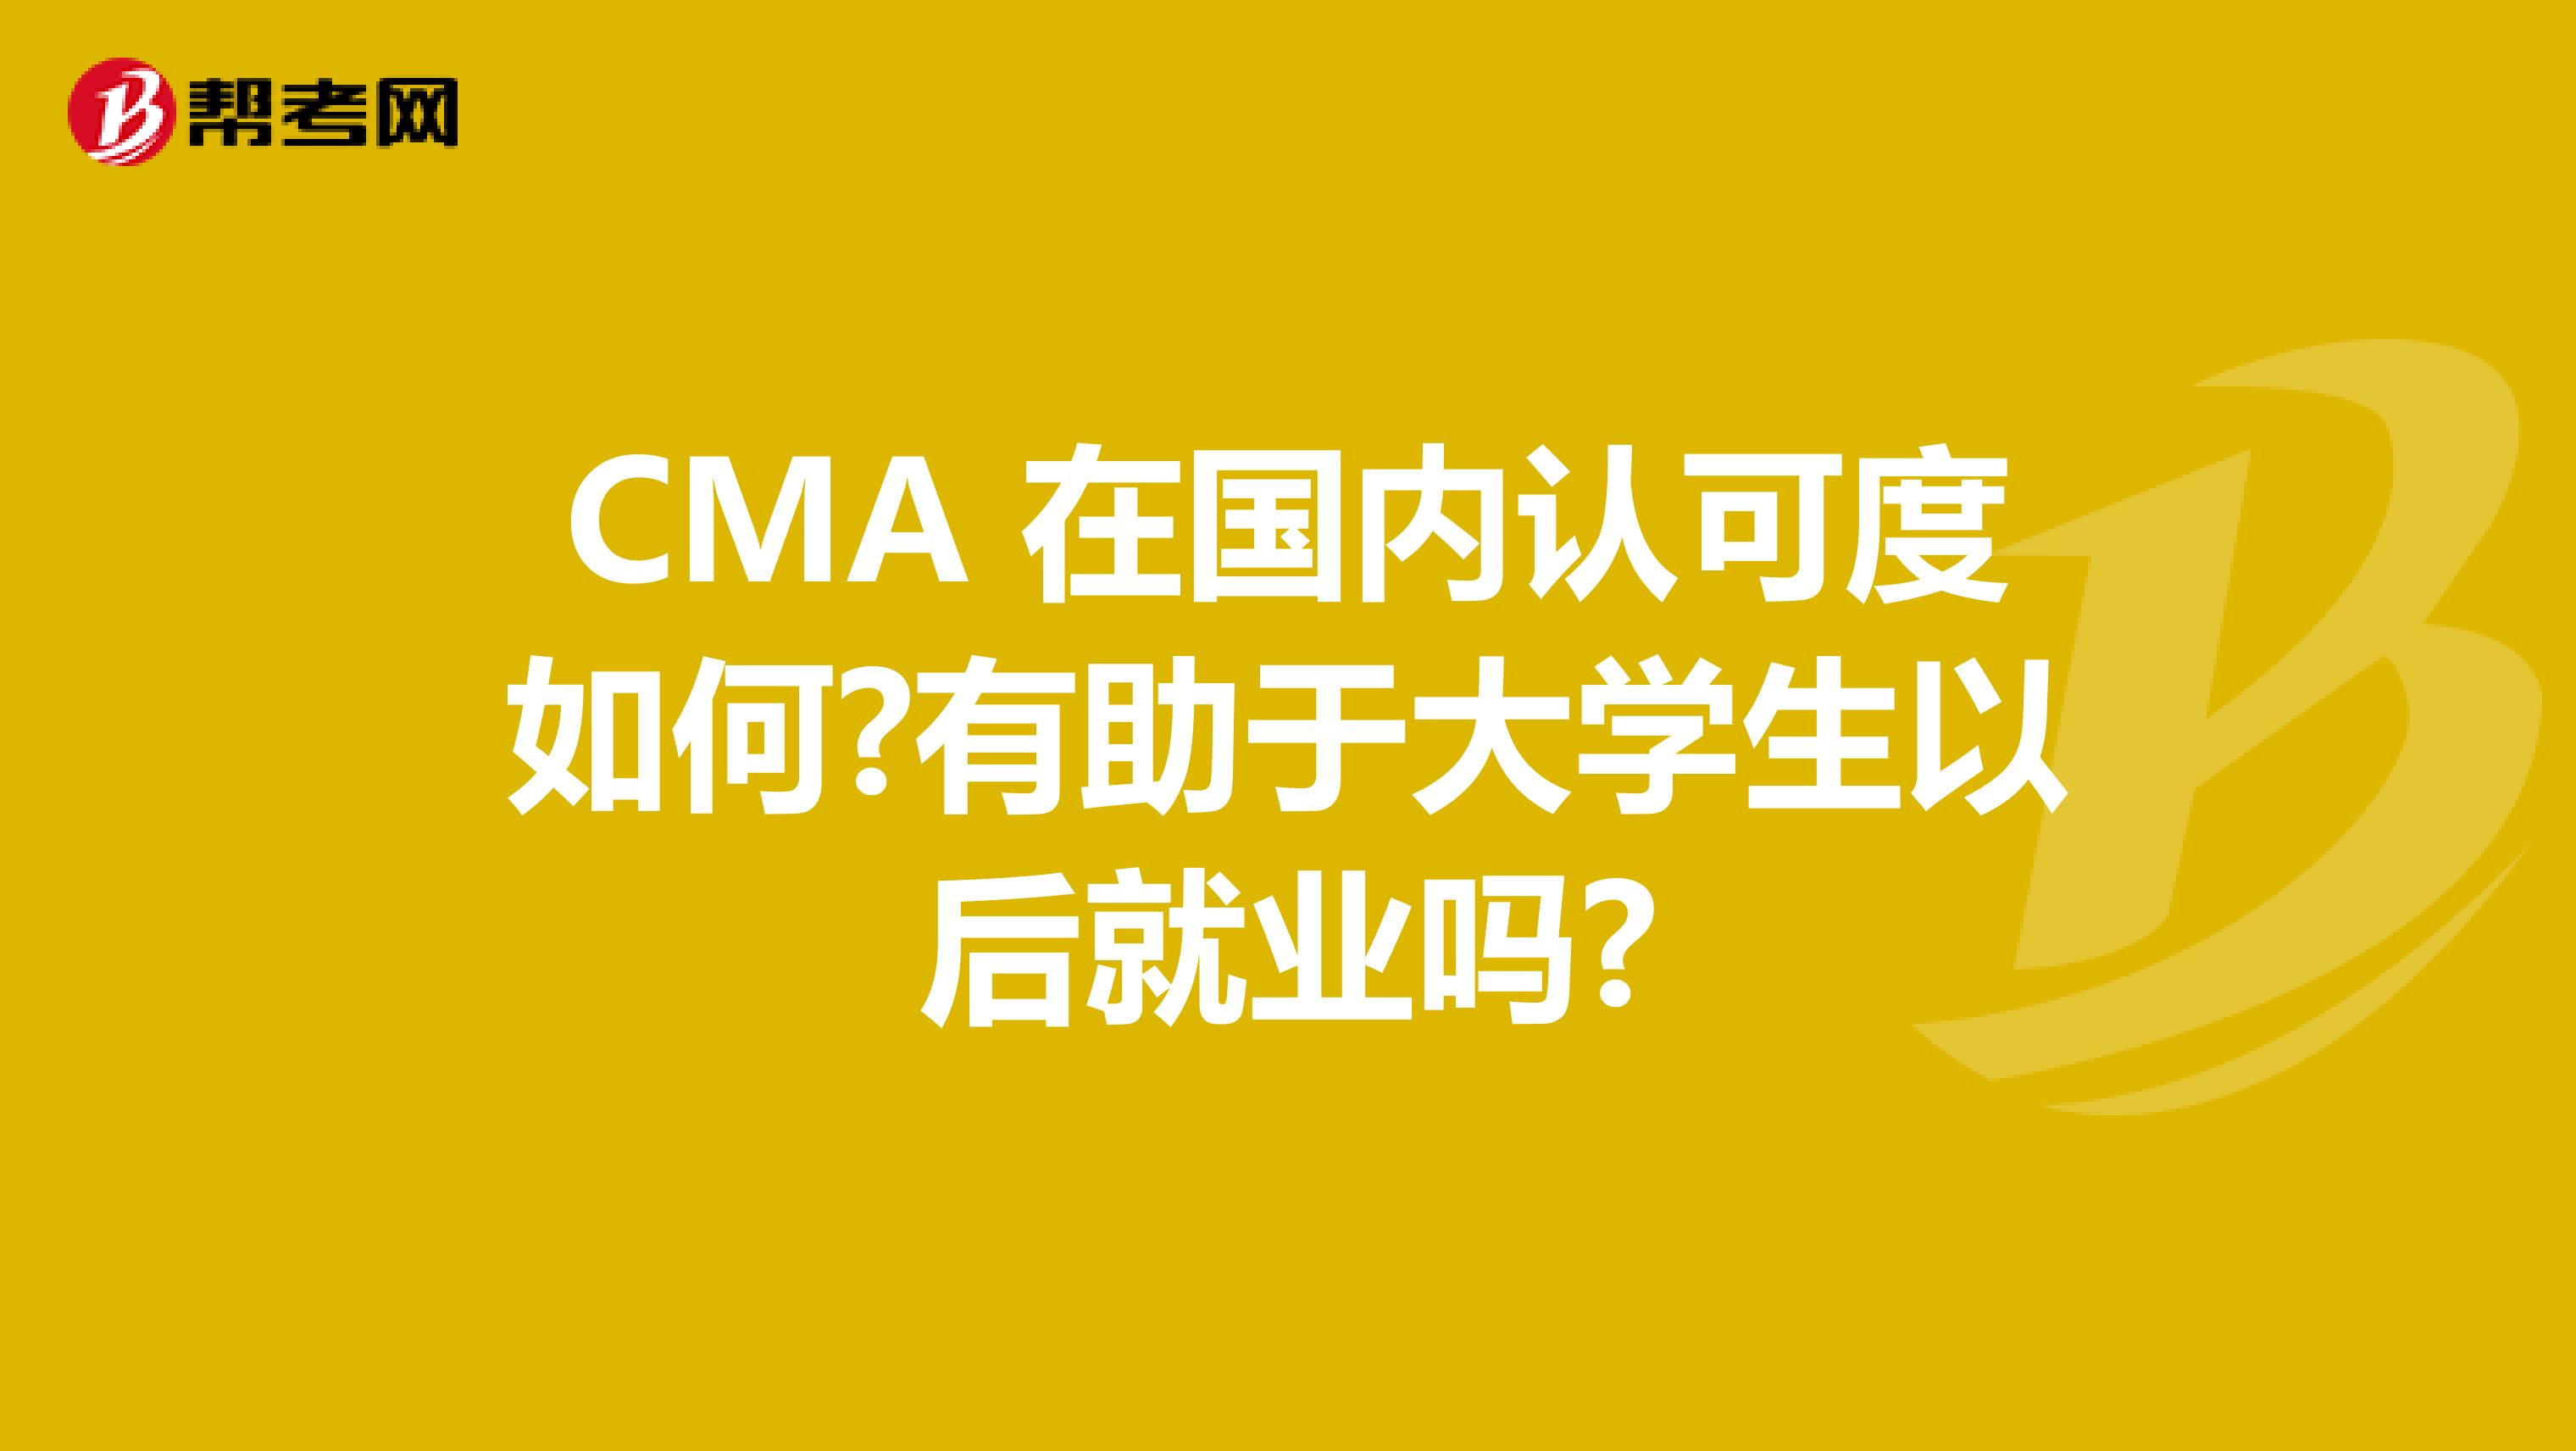  CMA 在国内认可度如何?有助于大学生以后就业吗?